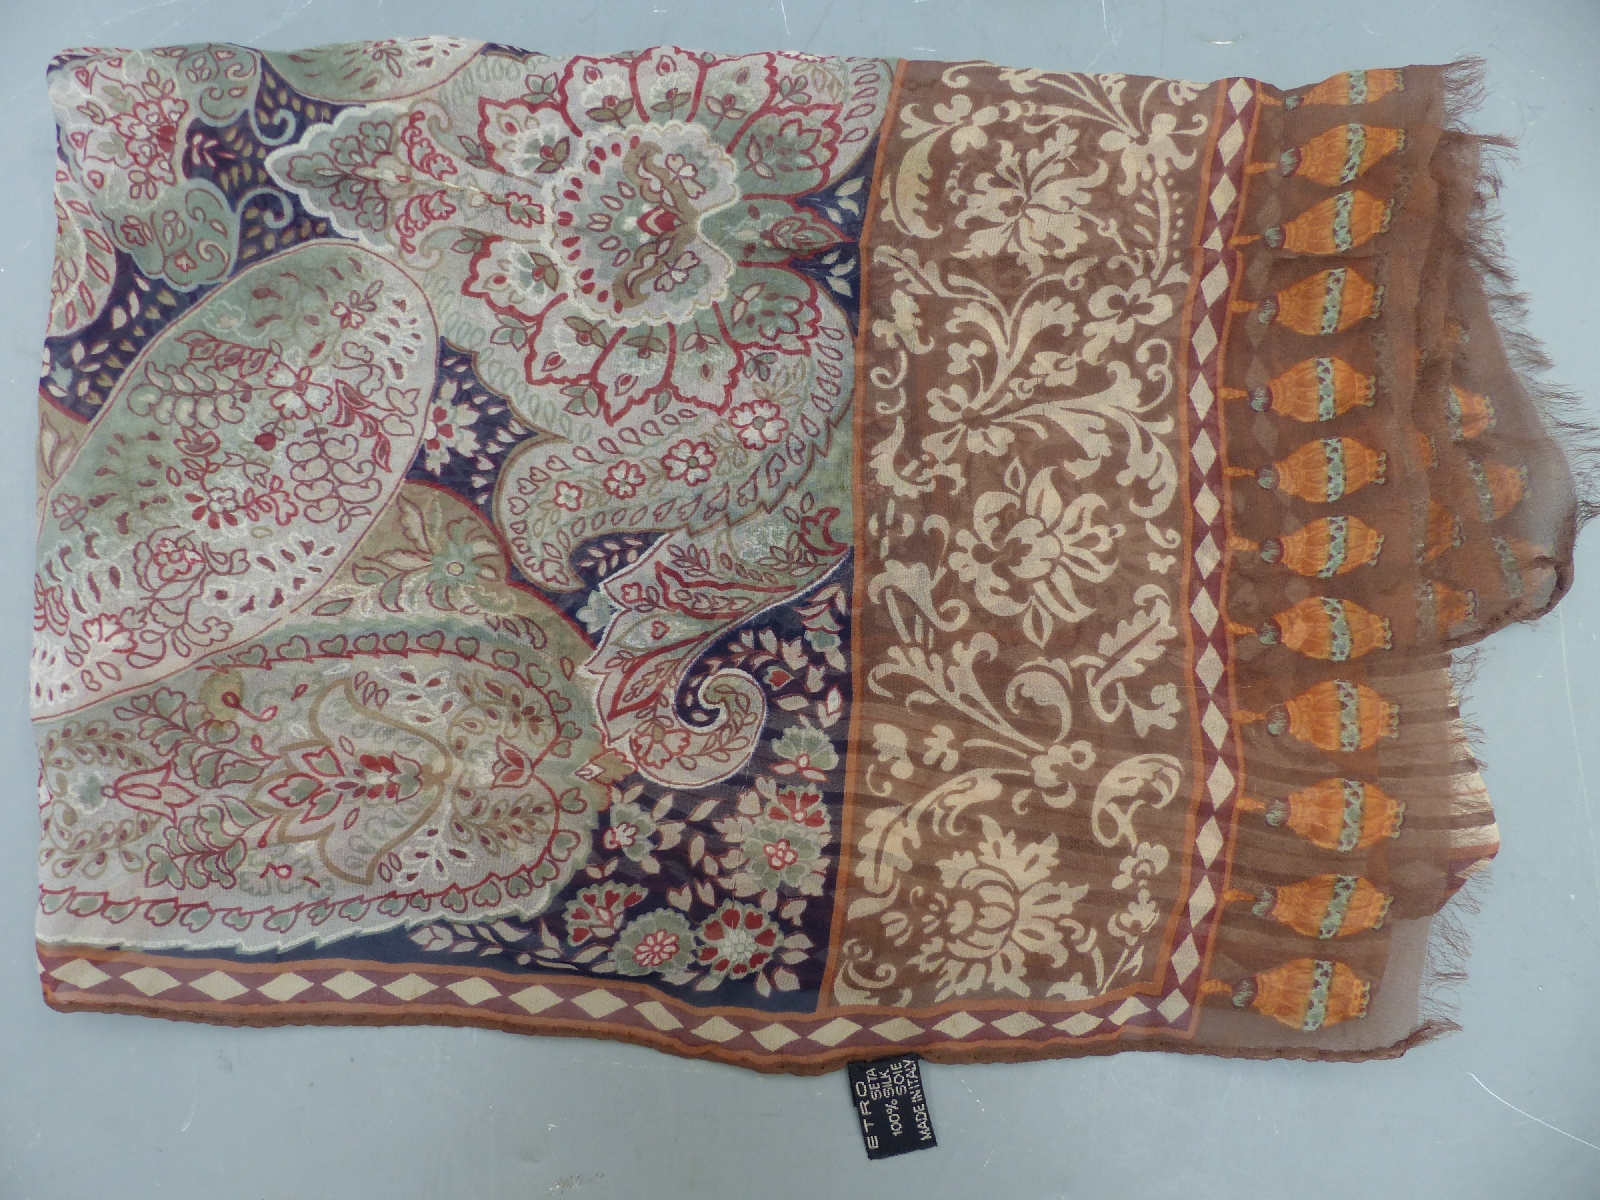 Hermes 'Romantique' silk scarf and an Etro Italian silk chiffon example - Image 2 of 5